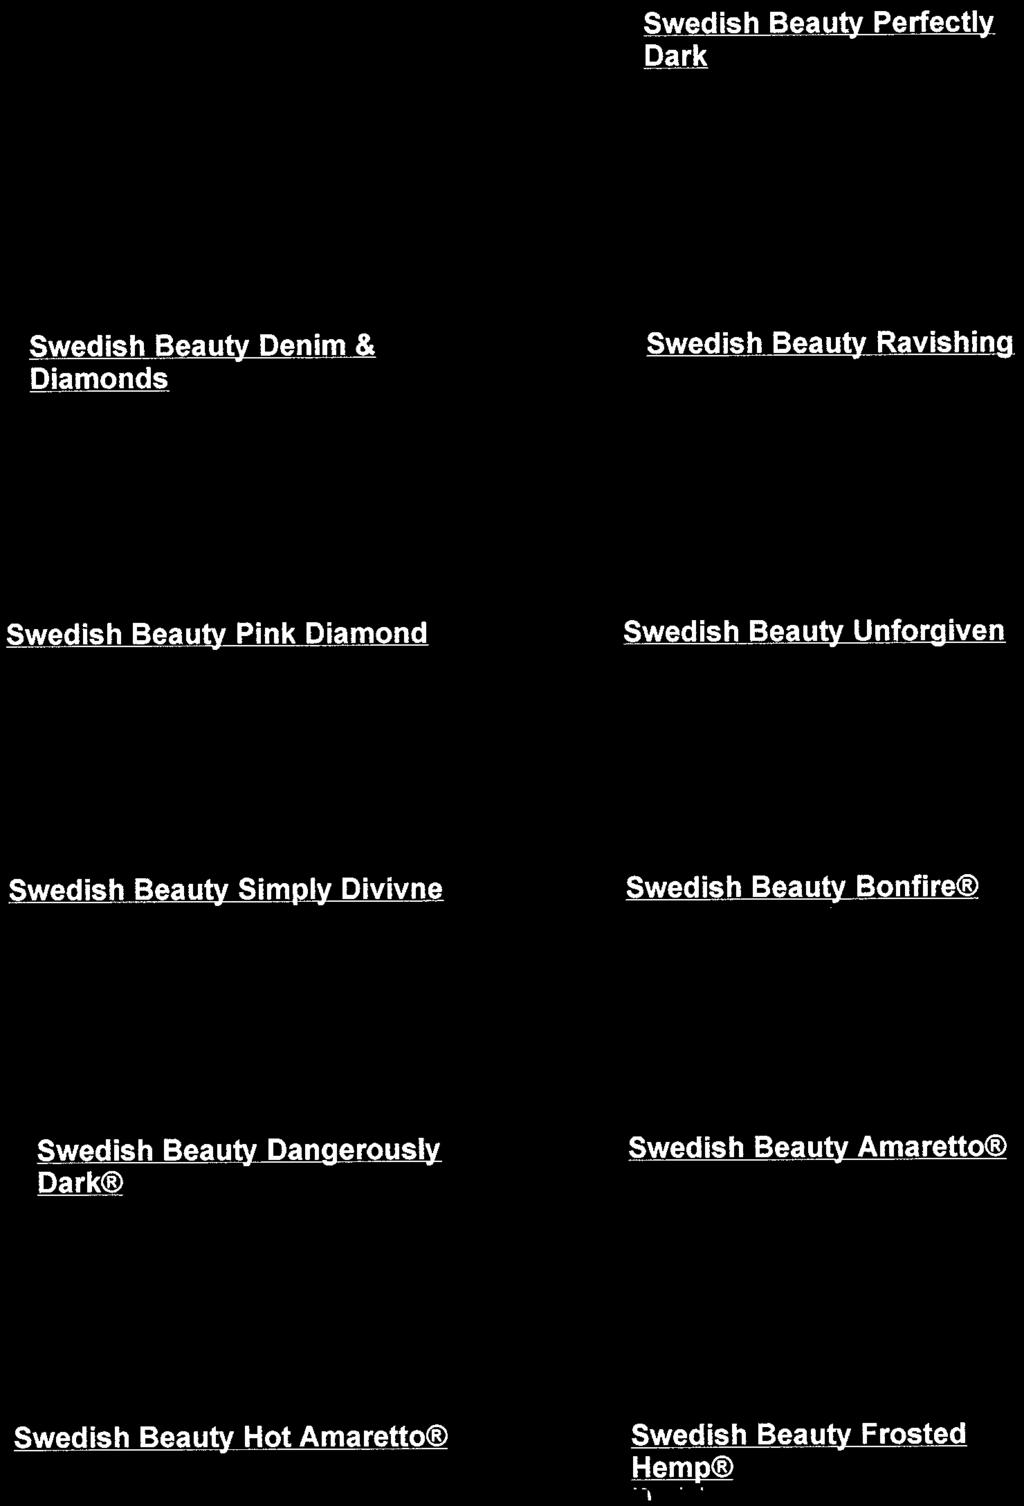 69 ~ Swedish Beauty Denim & Diamonds Swedish Beauty Denim & Diamonds SBDenimDiamonds Retail: $56.00 Your Price: $28.